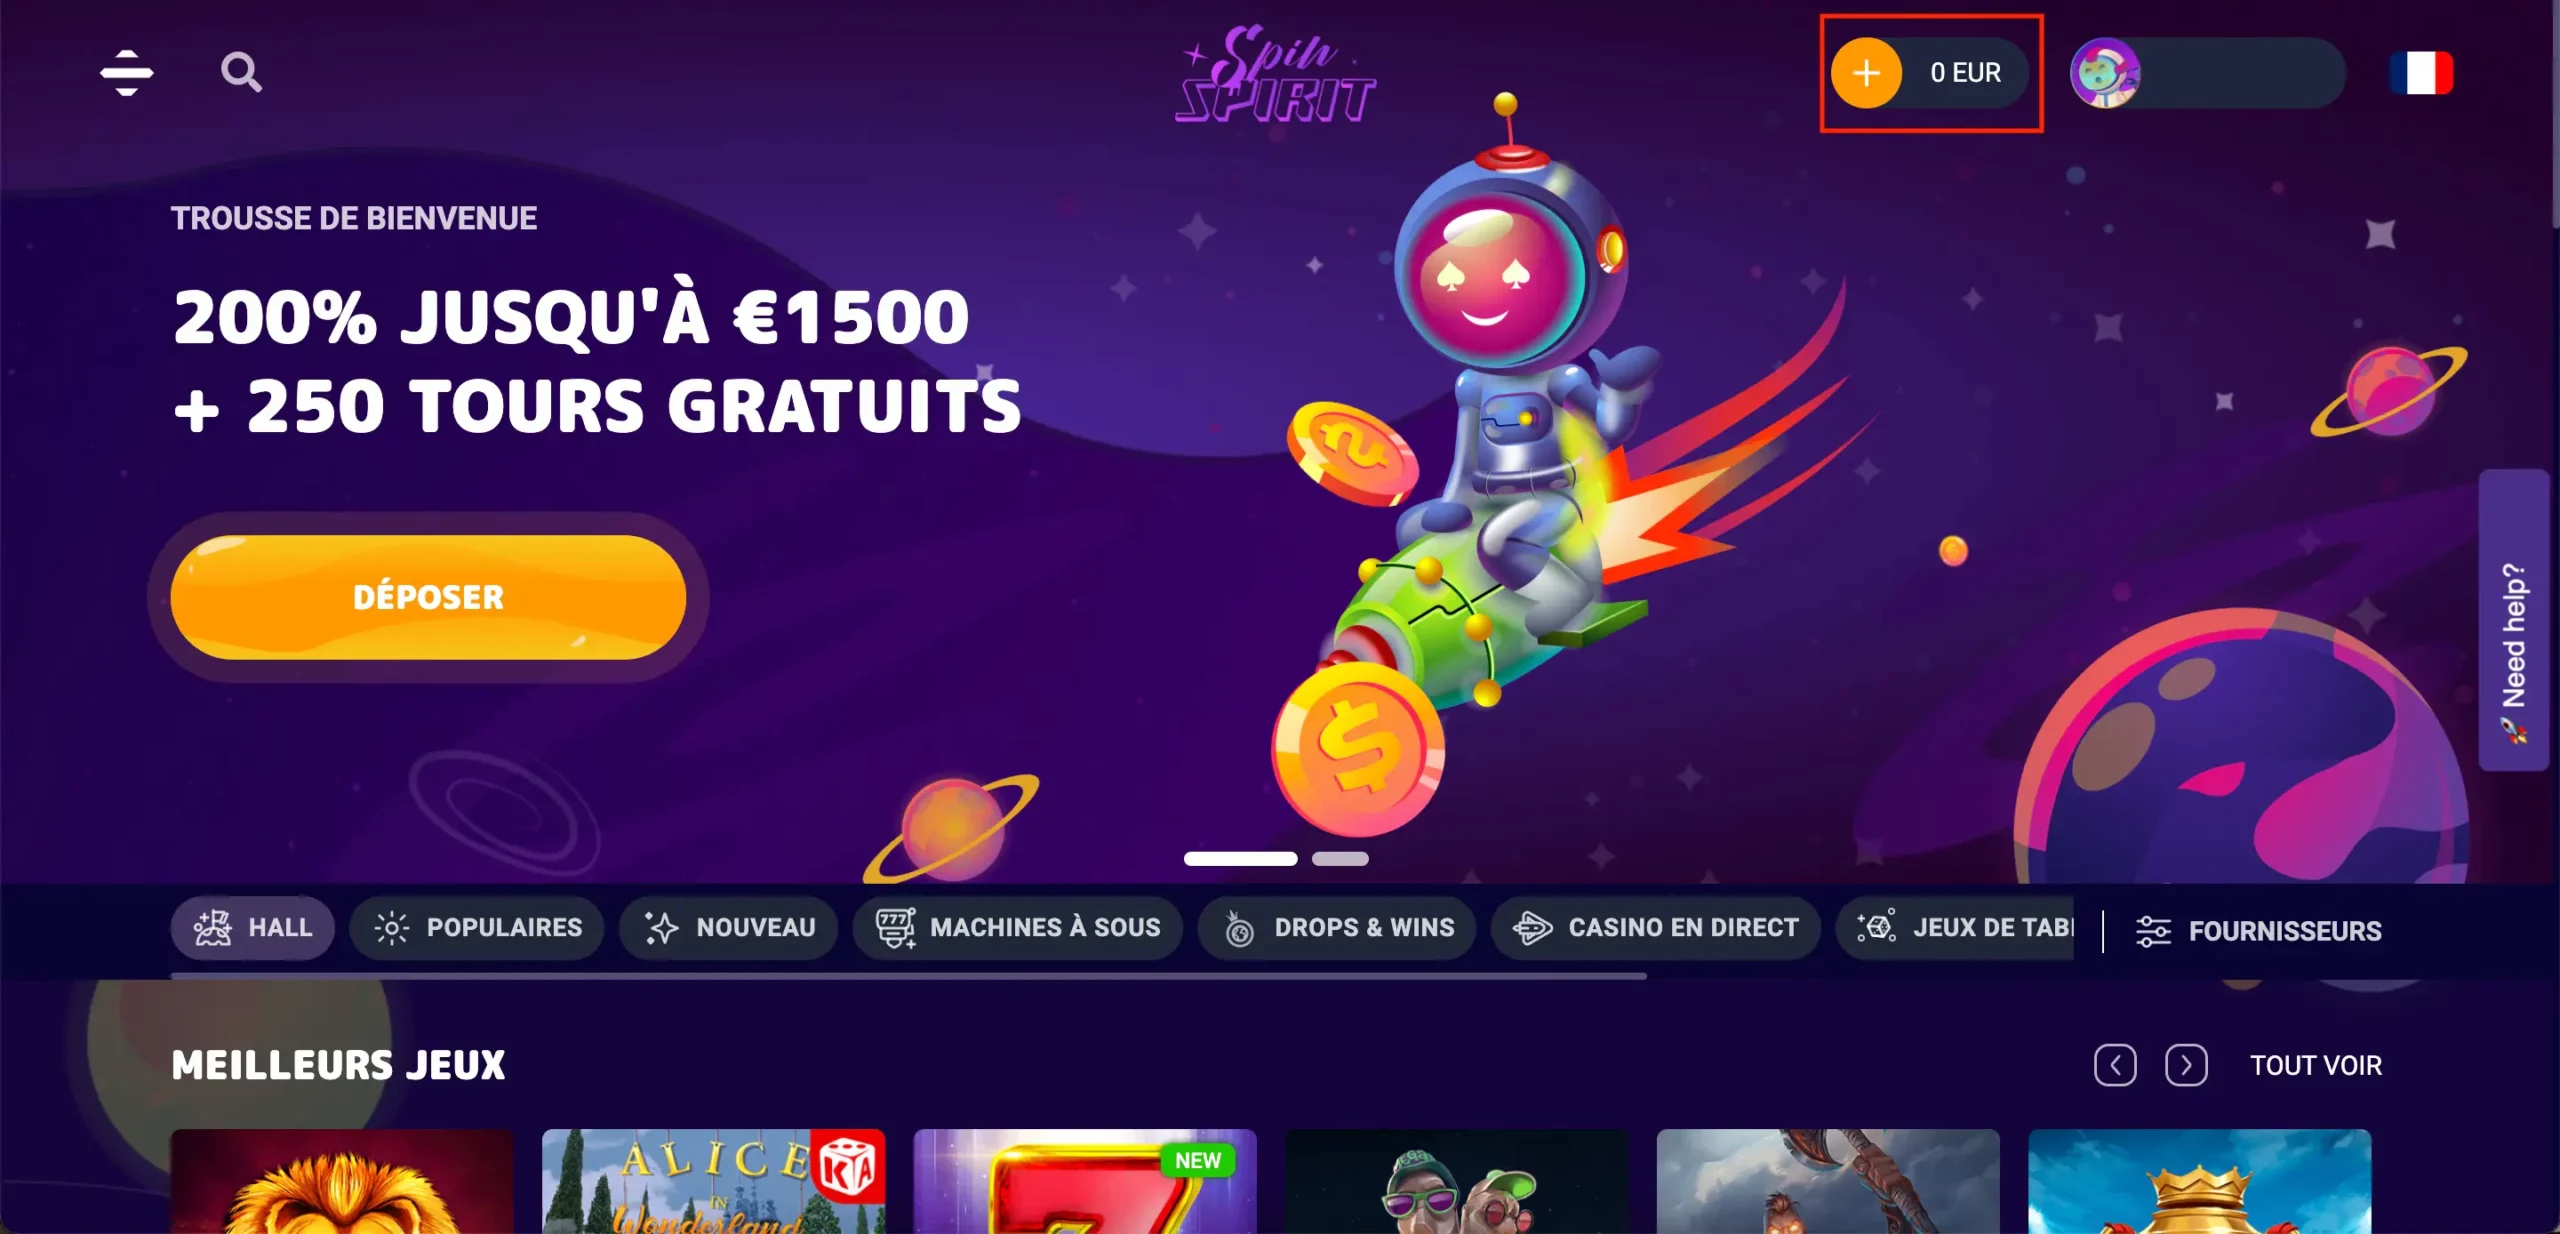 SpinSpirit Casino bonus